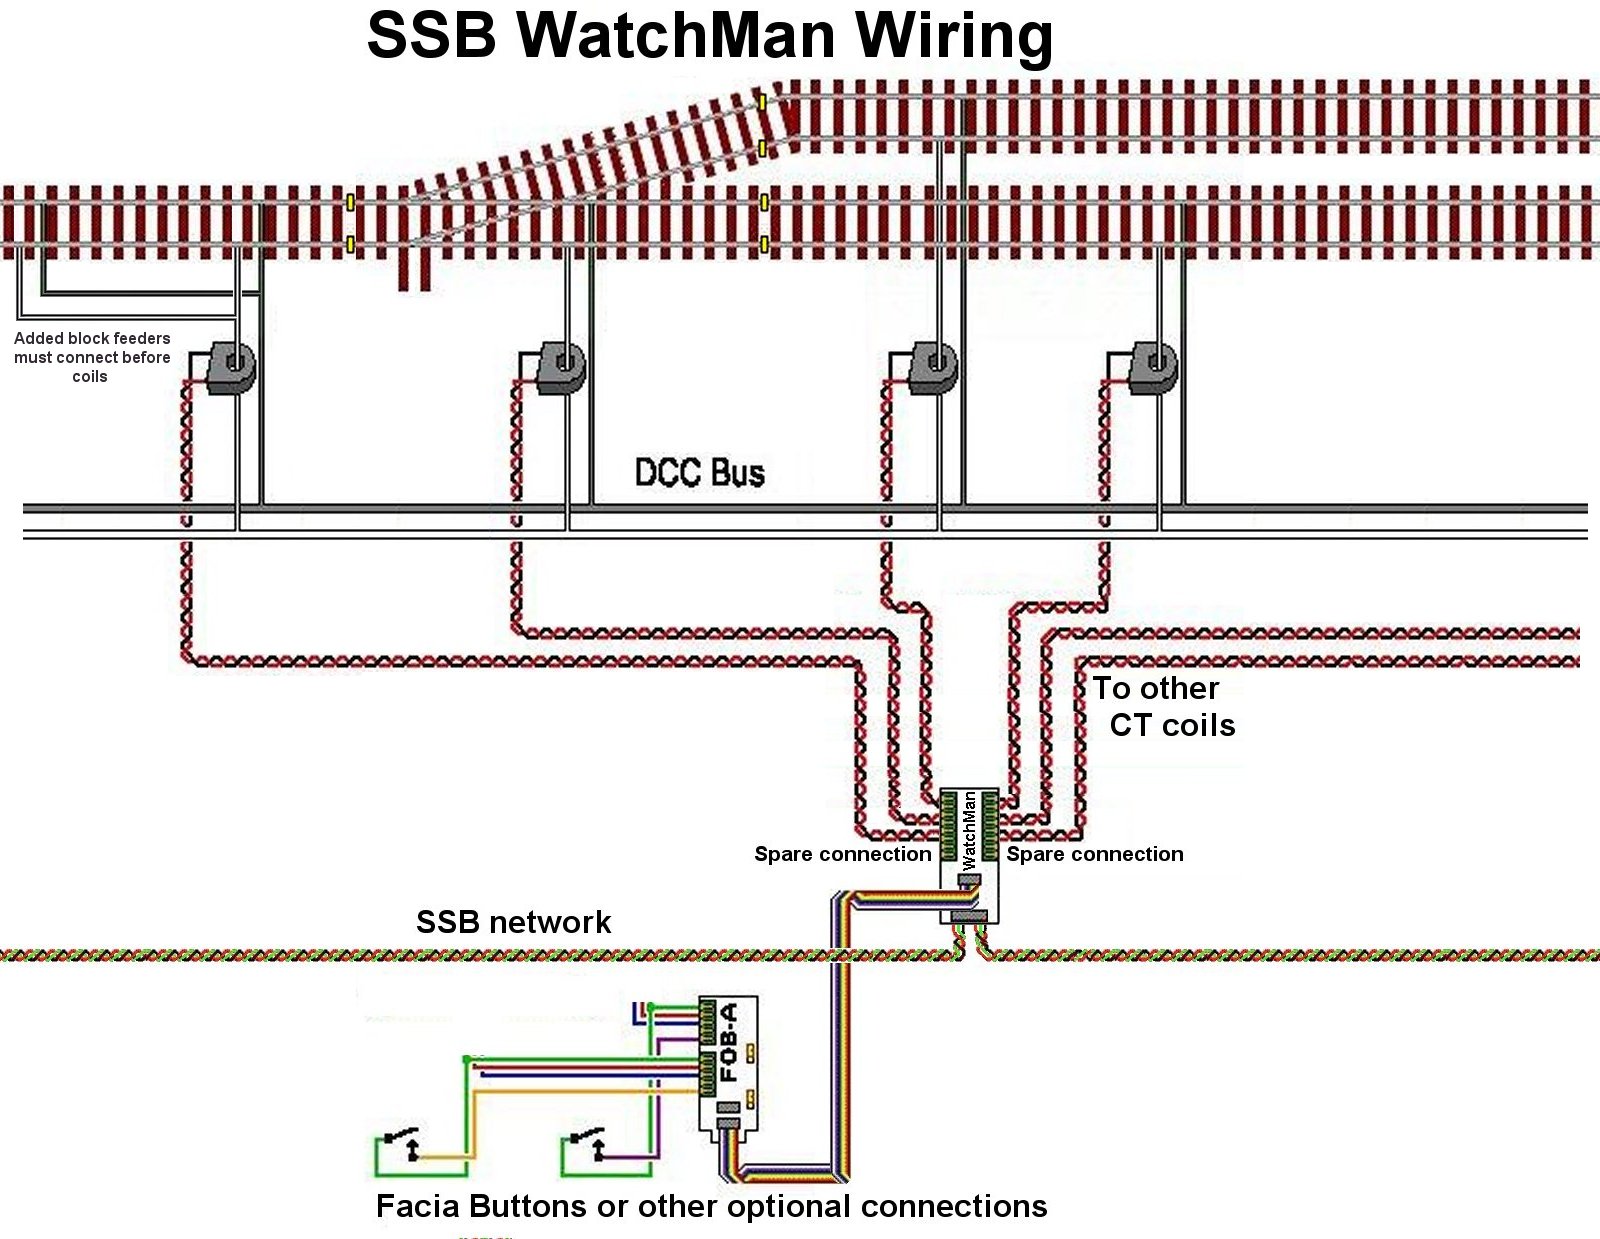 WatchMan wiring